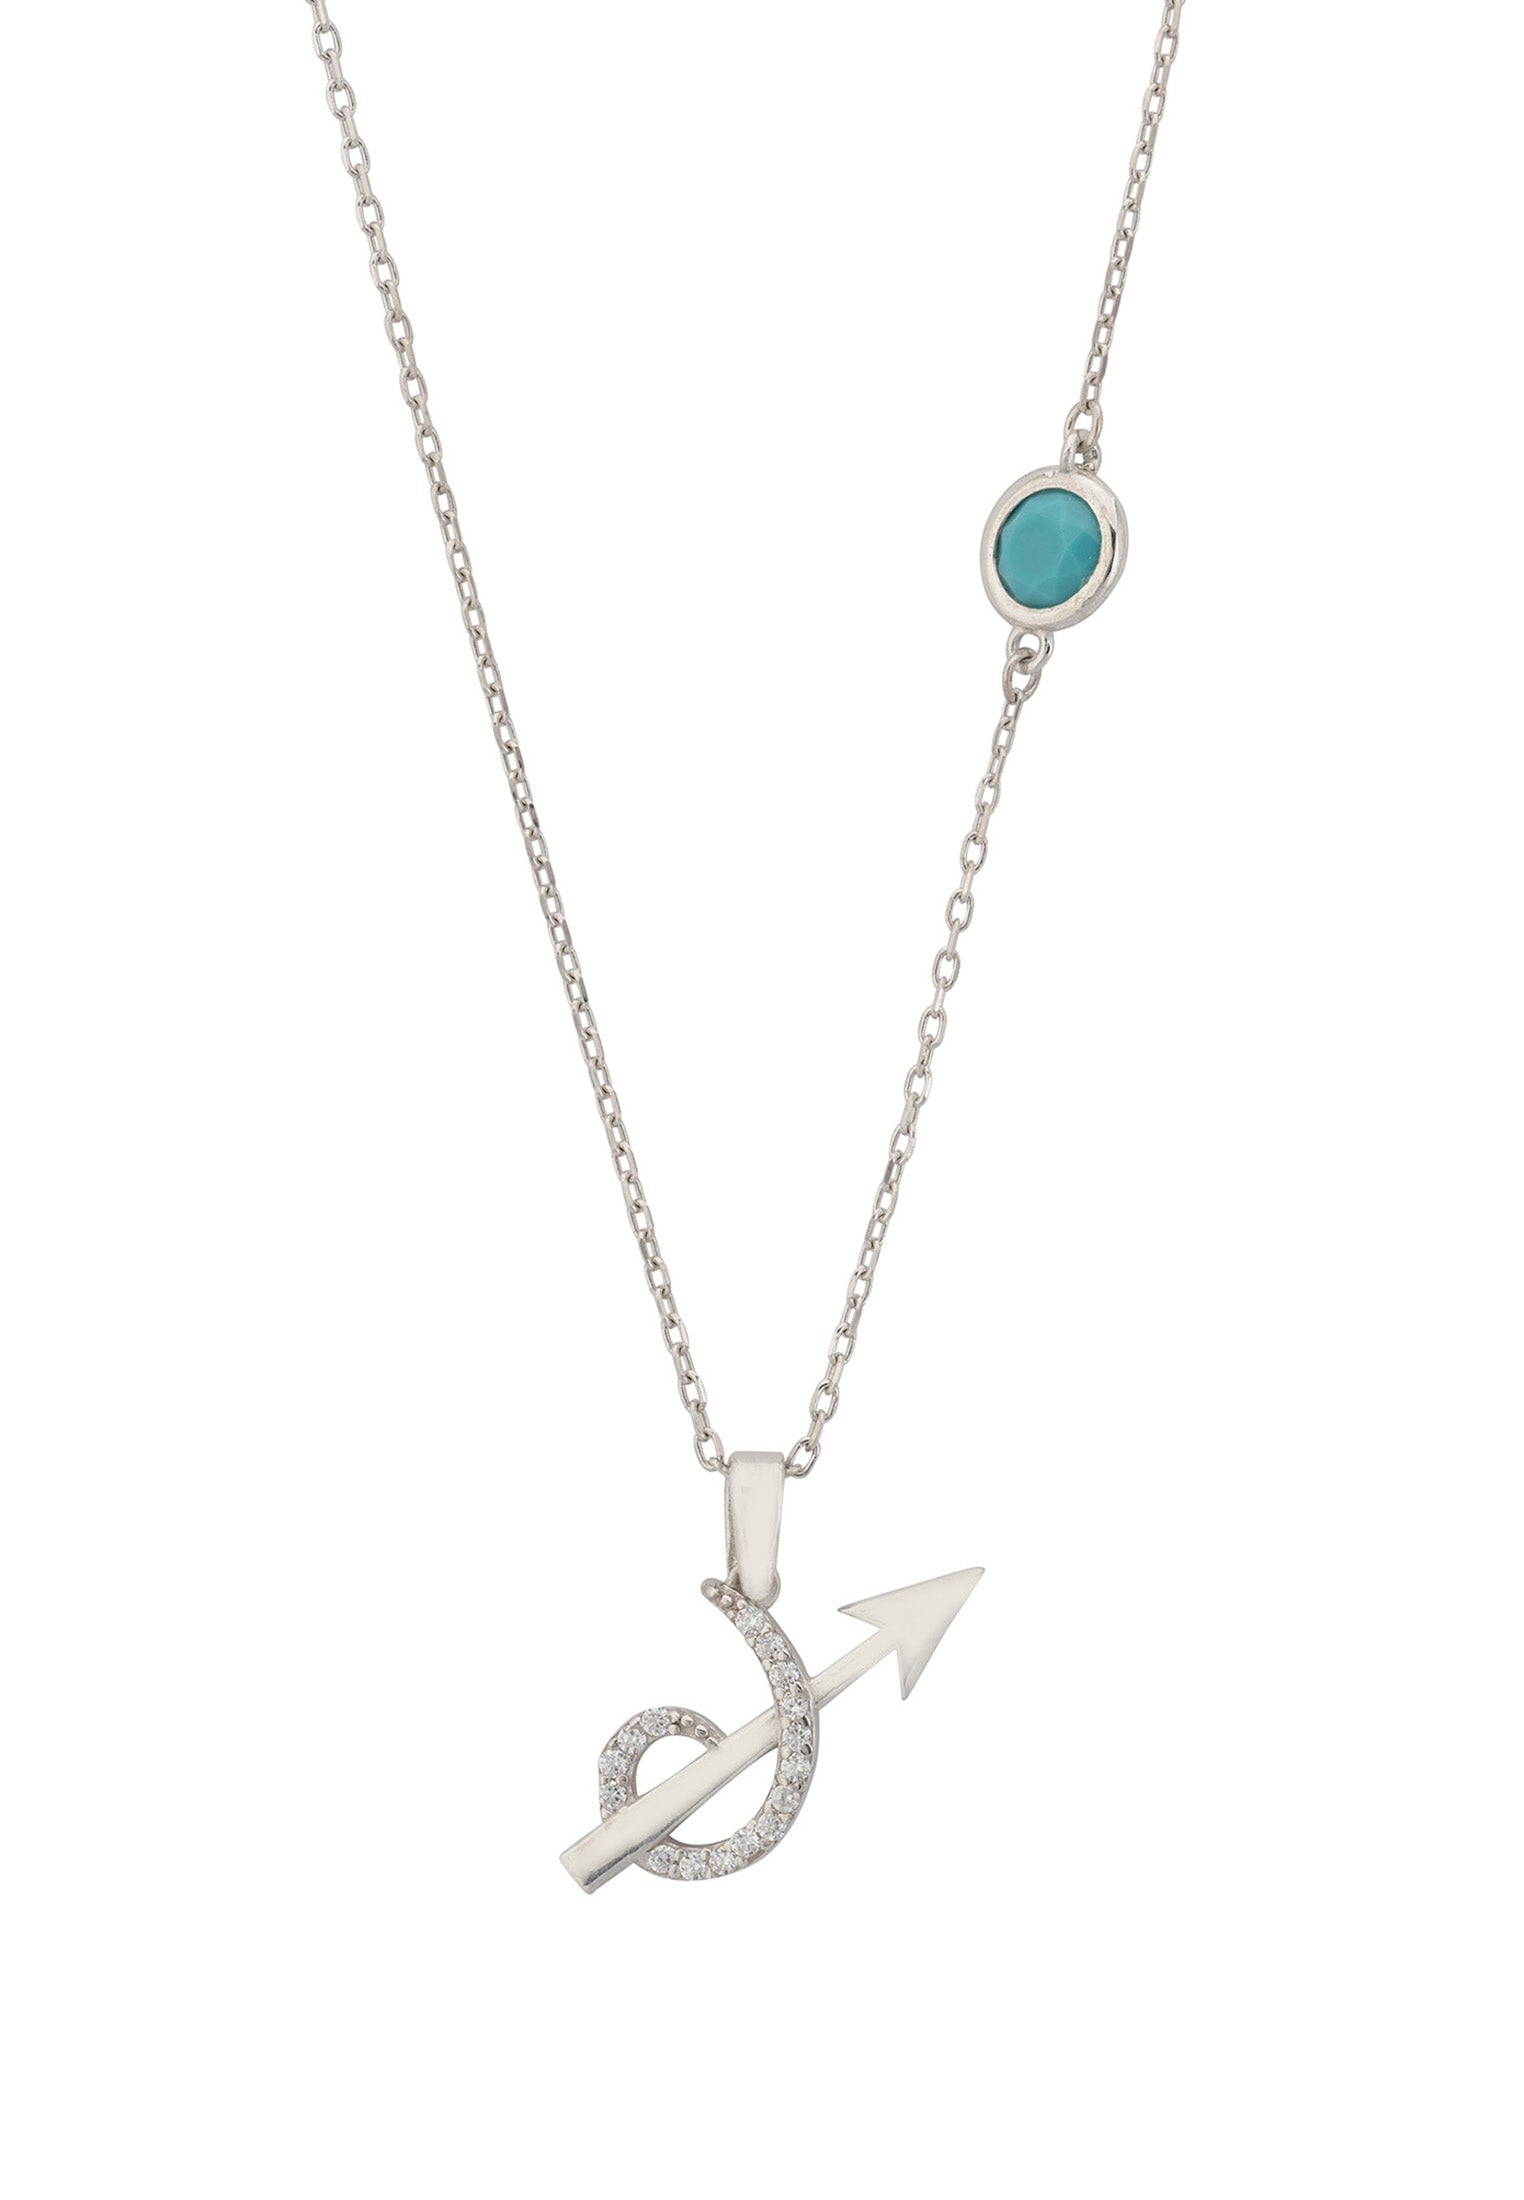 Zodiac Birthstone Sagittarius Necklace Turquoise Silver